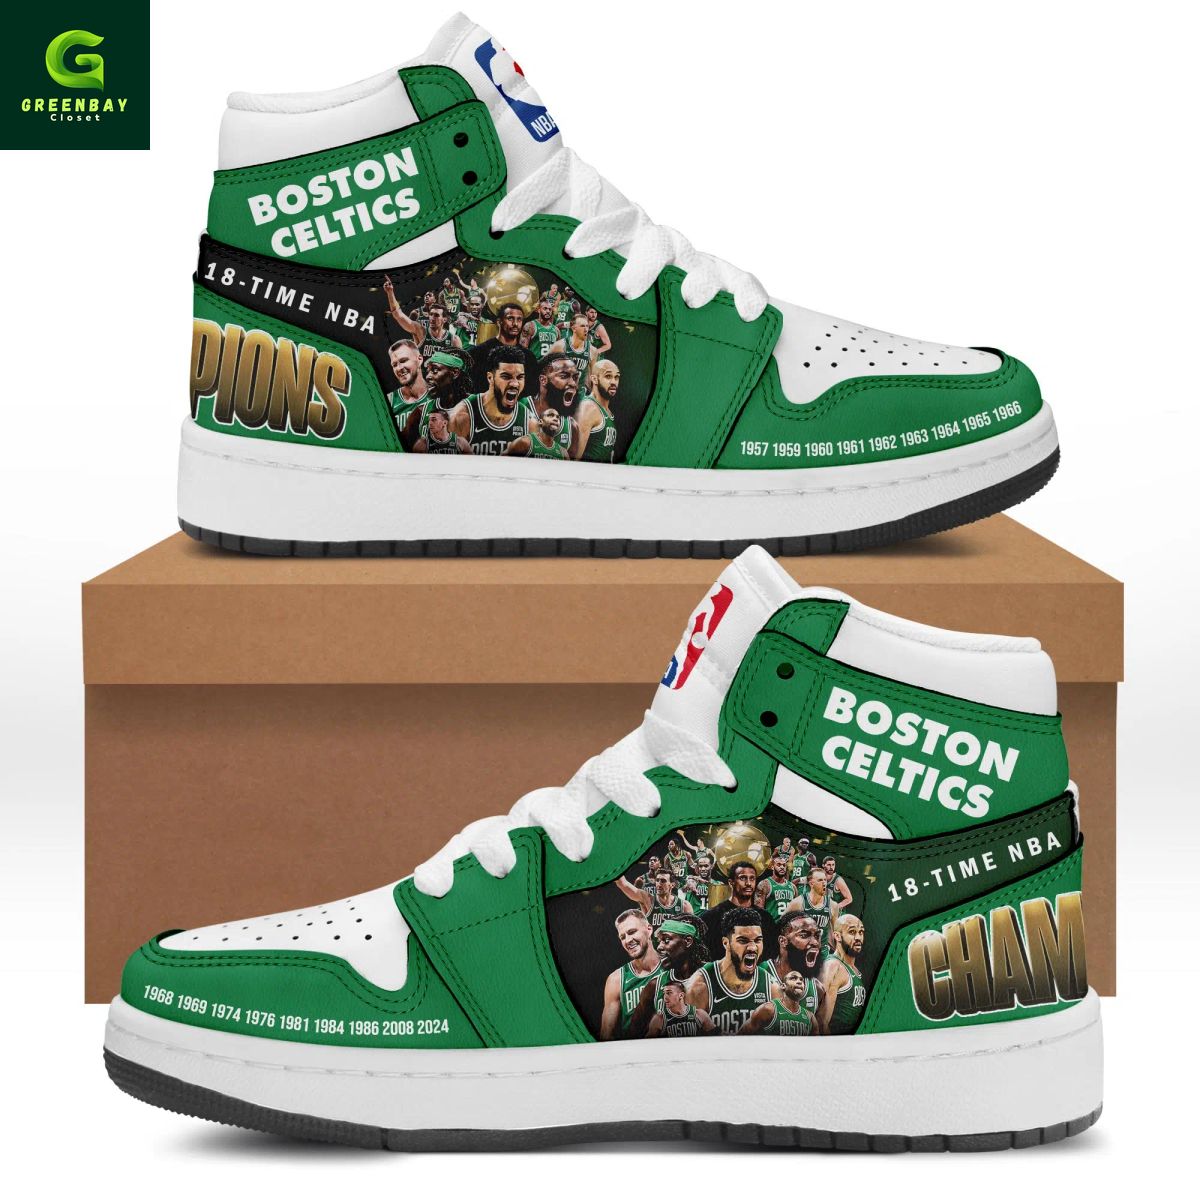 Free Shipping] Boston Celtics 18 time NBA Champions air jordan 1 sneaker